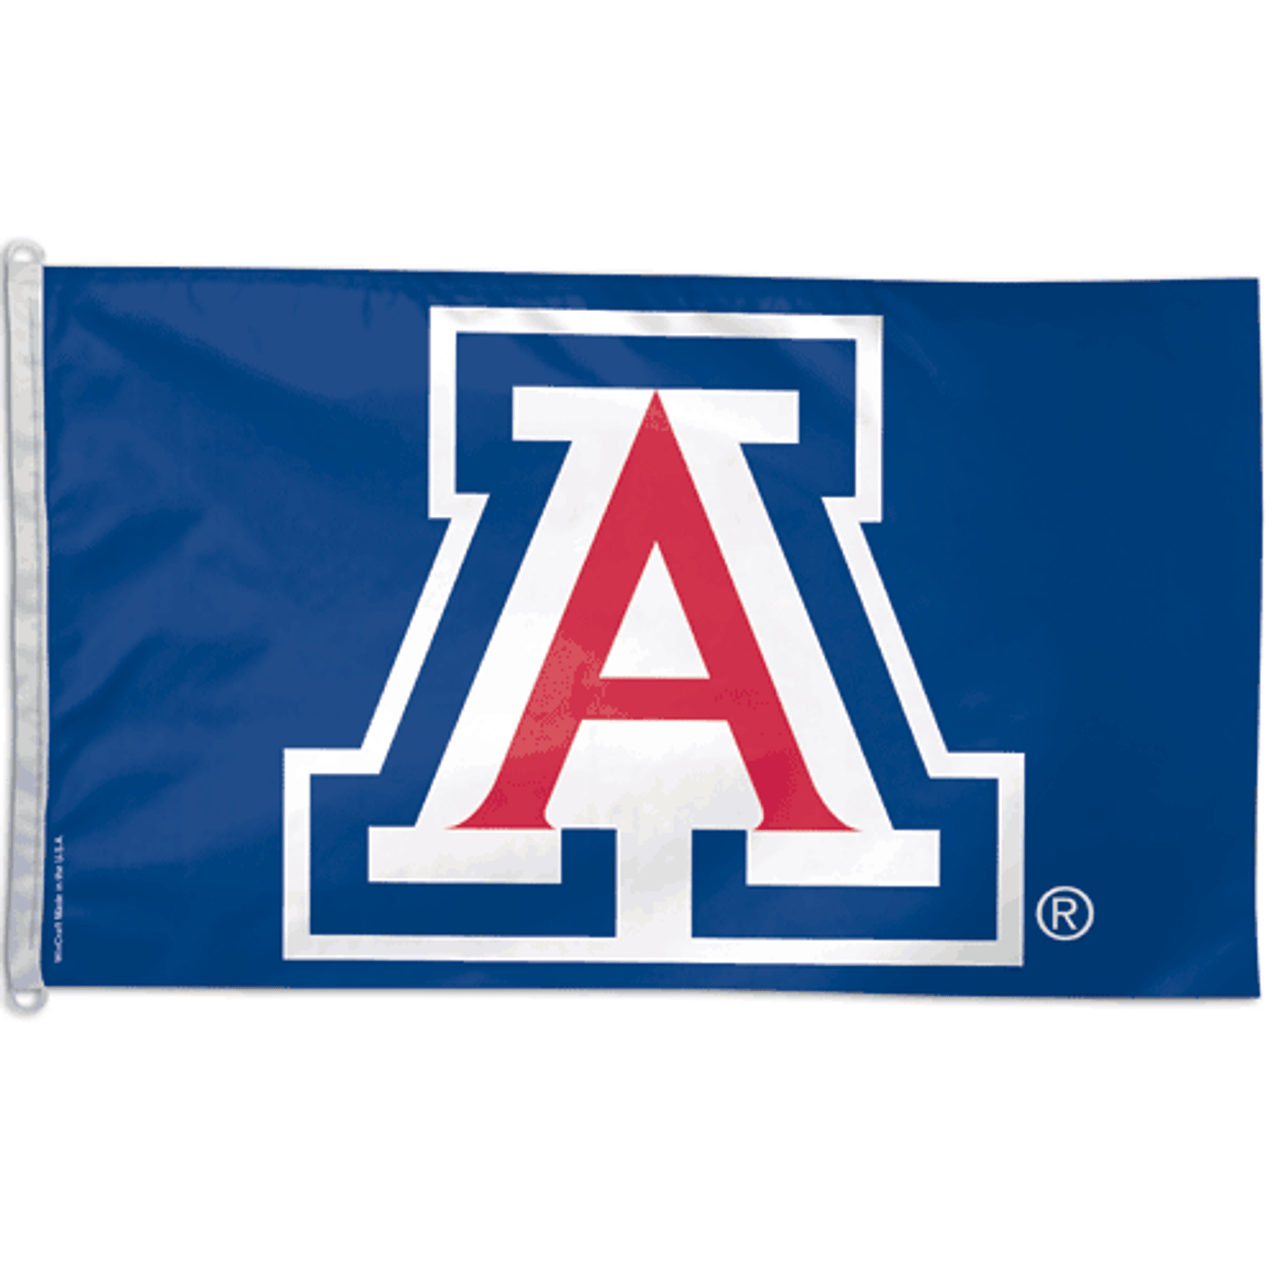 Arizona Diamondbacks flag color codes